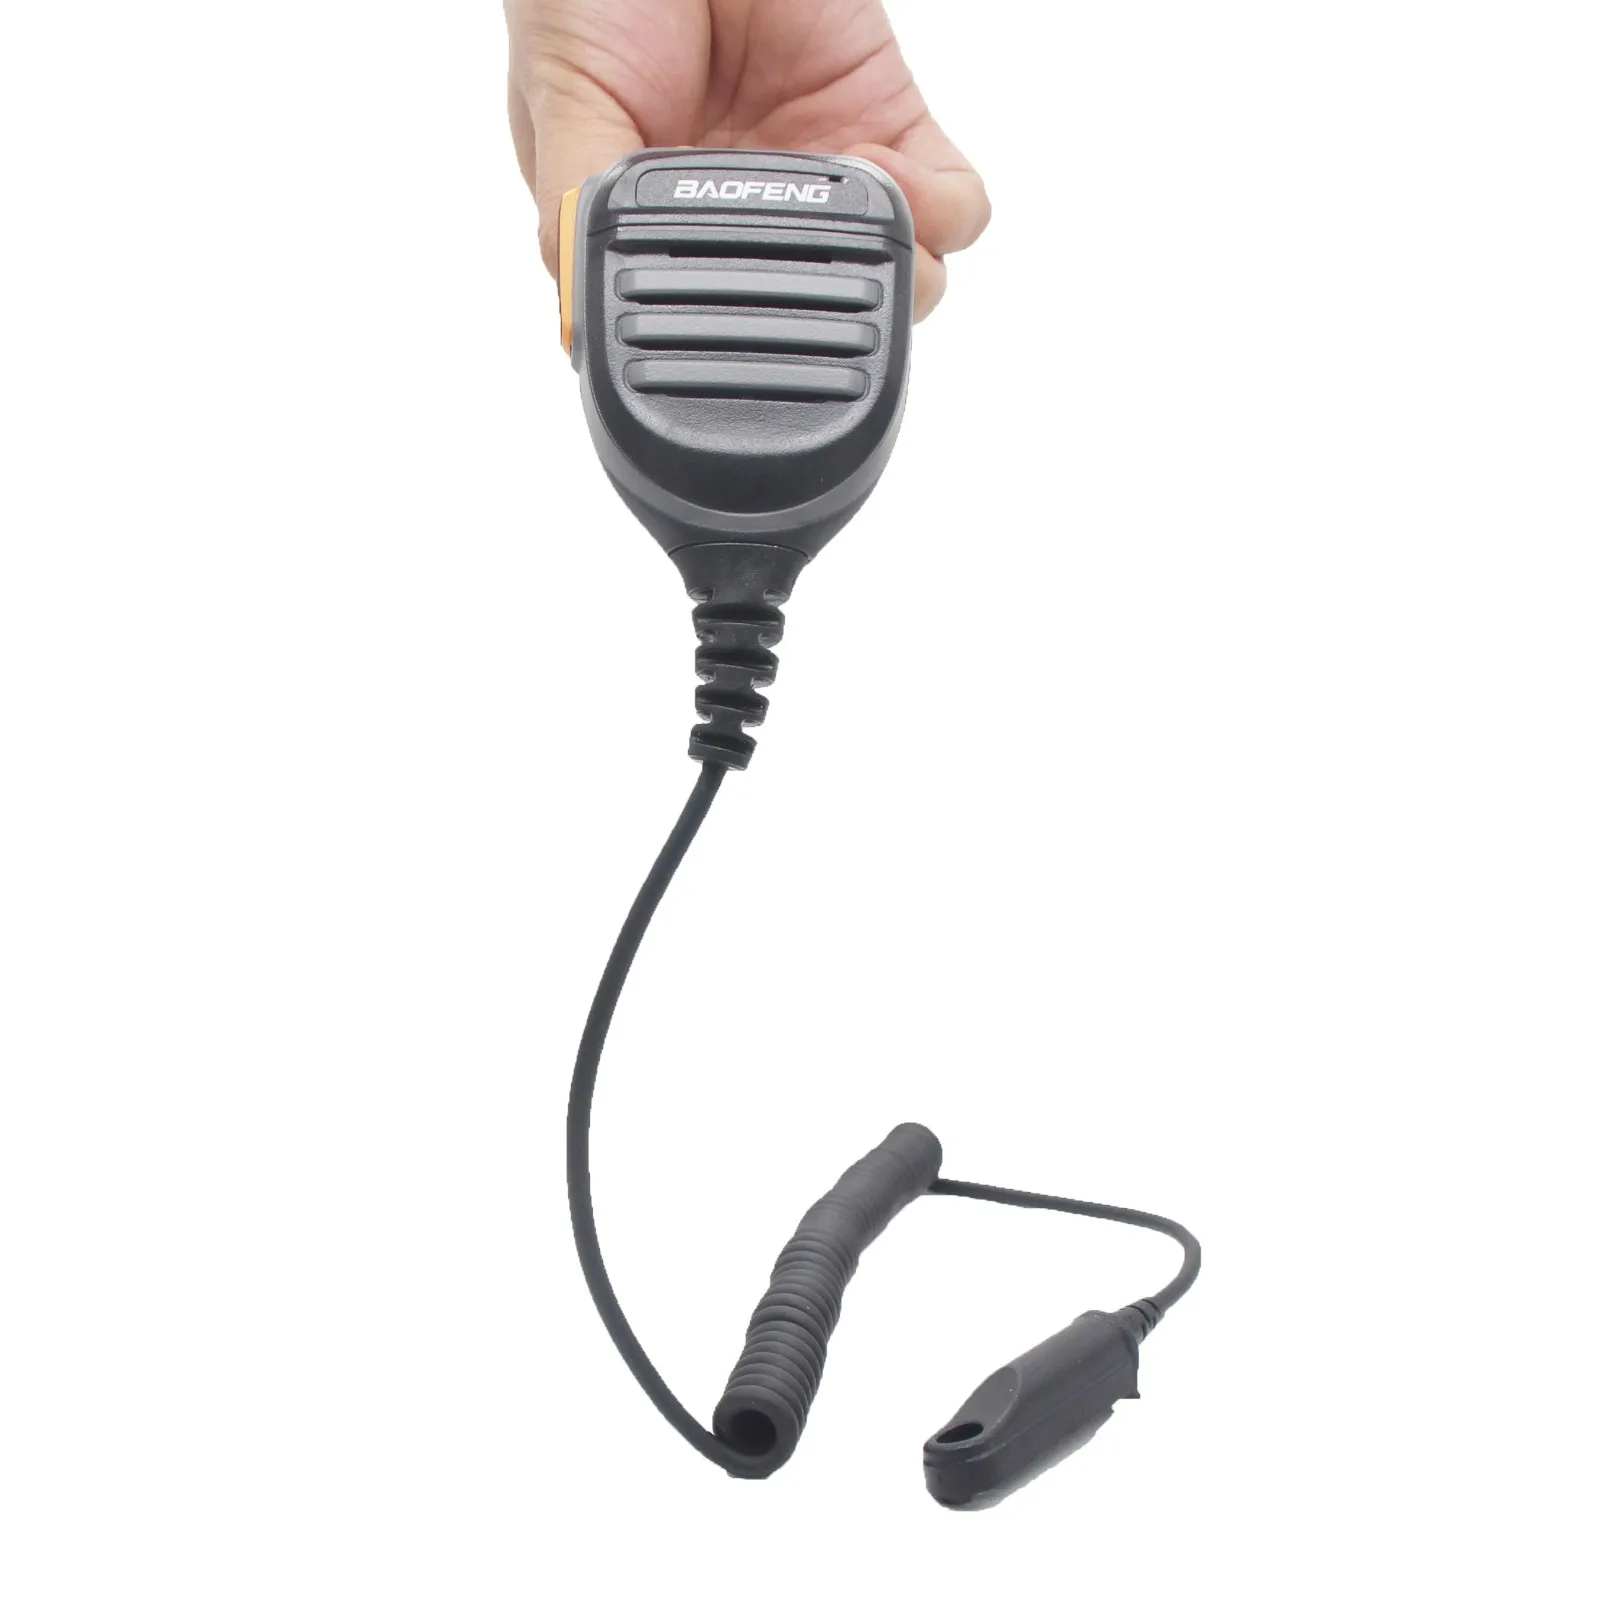 

Waterproof Shoulder Speaker Microphone PTT For BAOFENG UV-9R Plus UV-XR UV9R Pro GT-3WP BF-9700 BF-A58 Radio